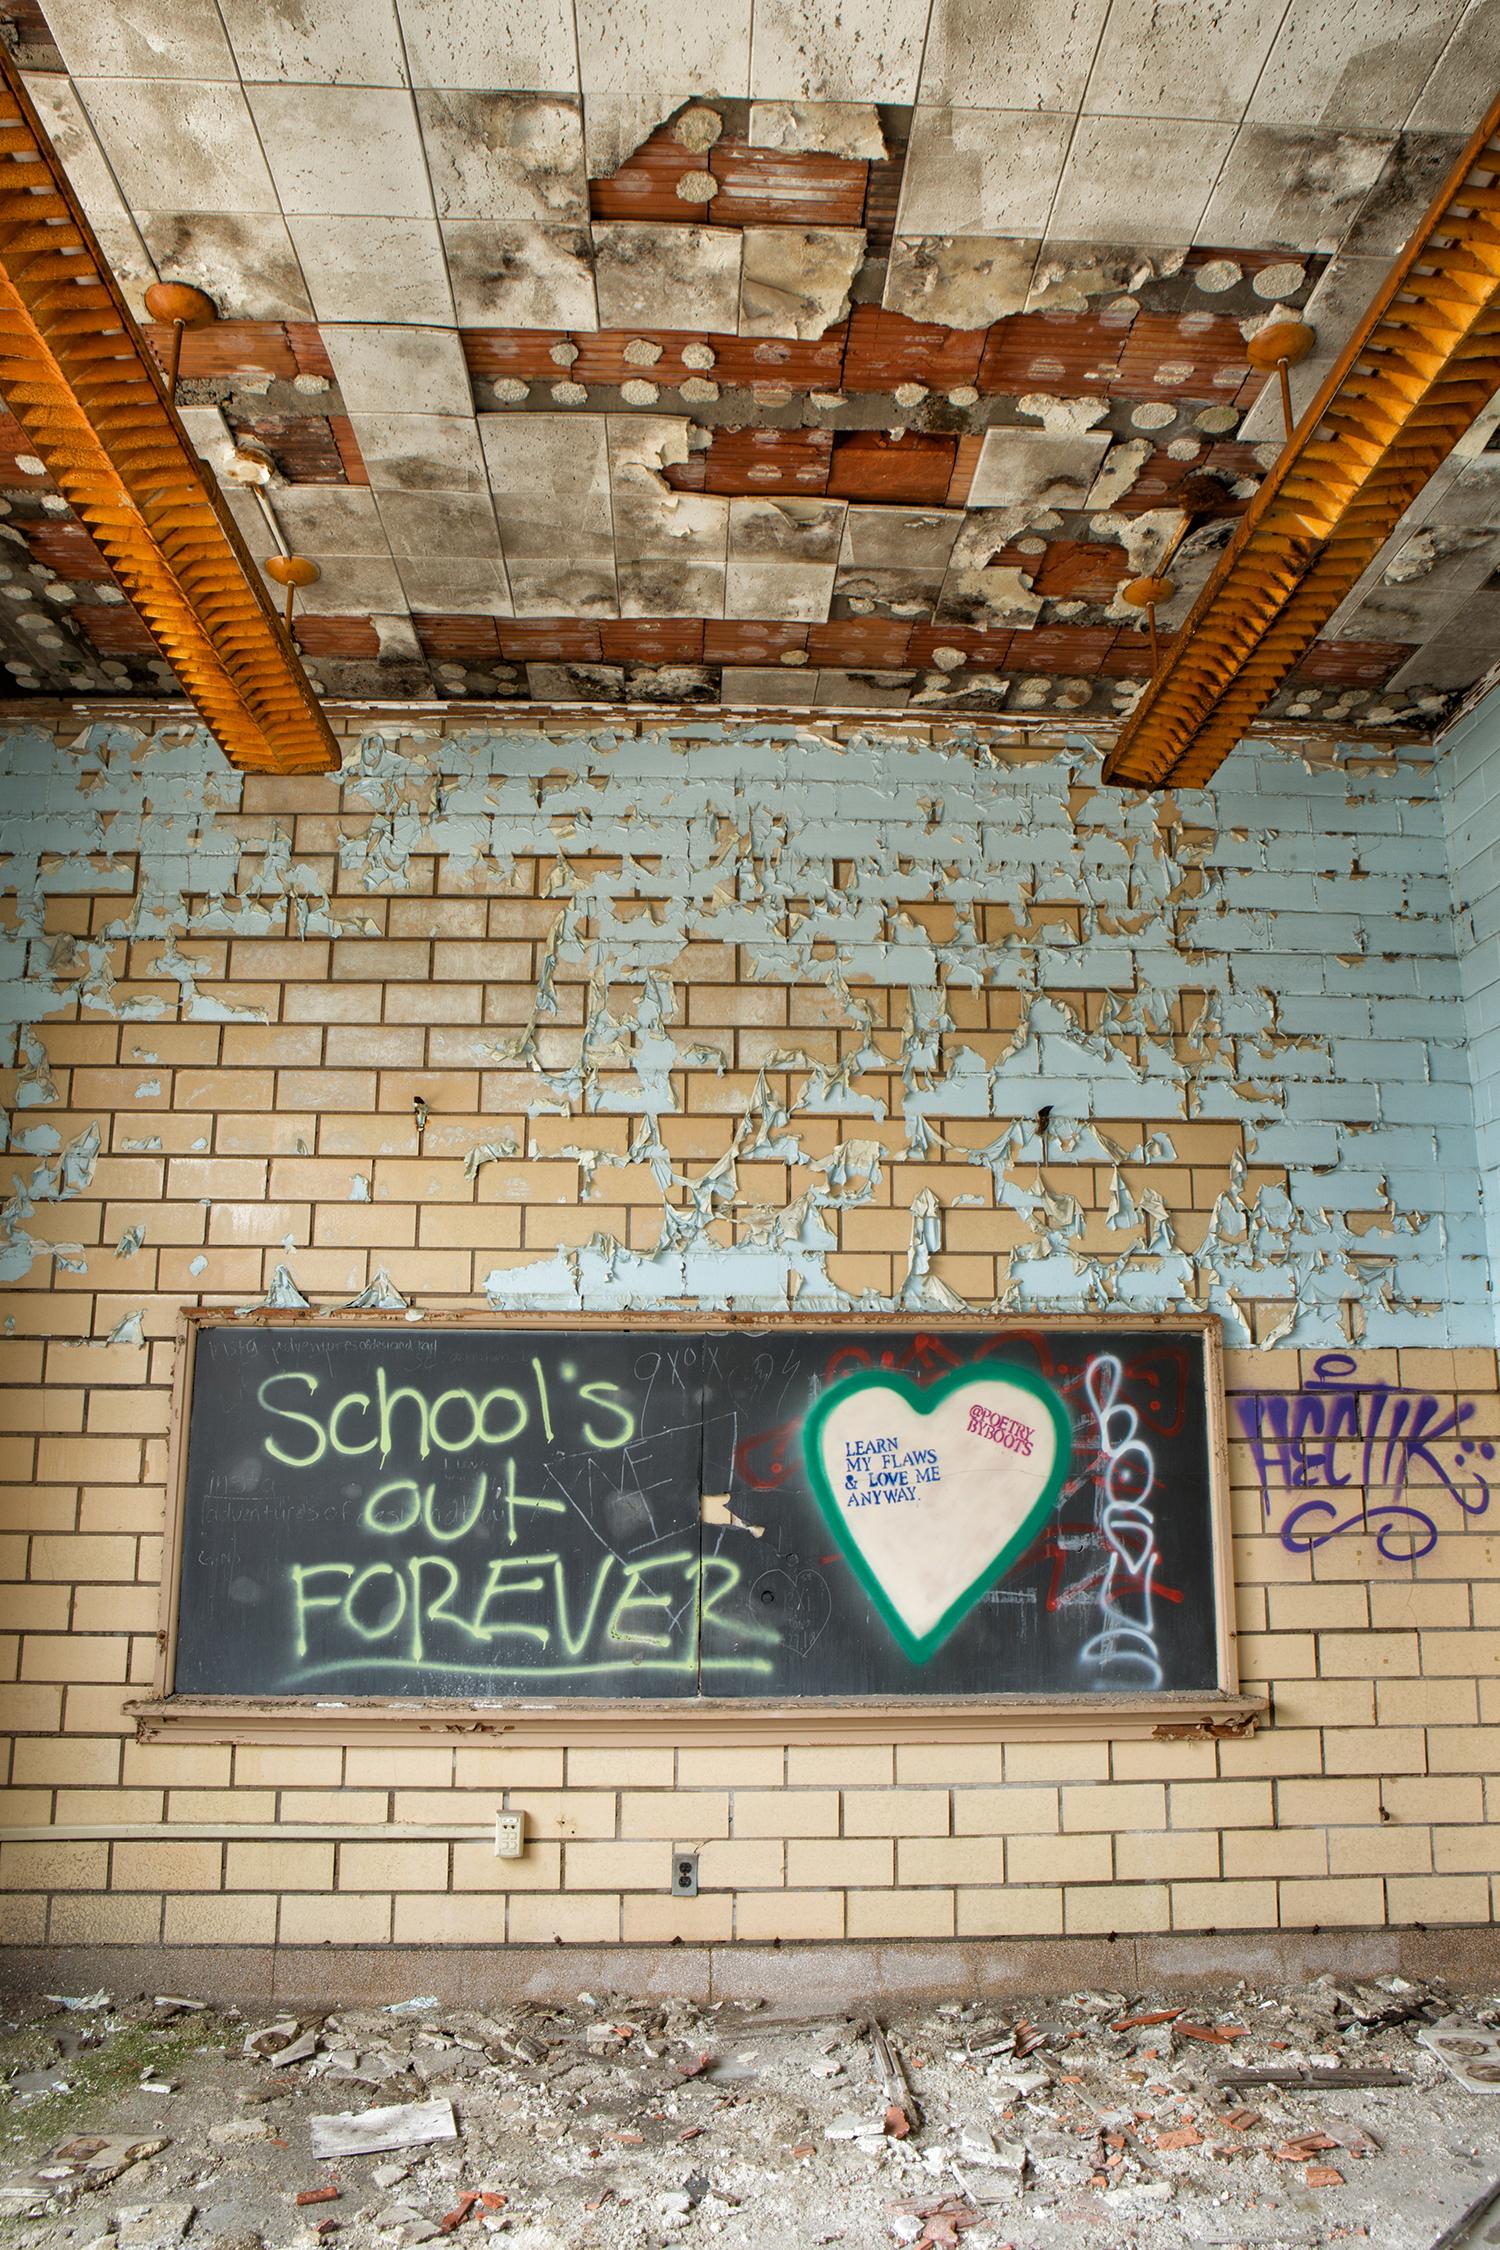 Rebecca Skinner Color Photograph - "Disorderly", color photograph, abandoned, school, graffiti, chalkboard, blue